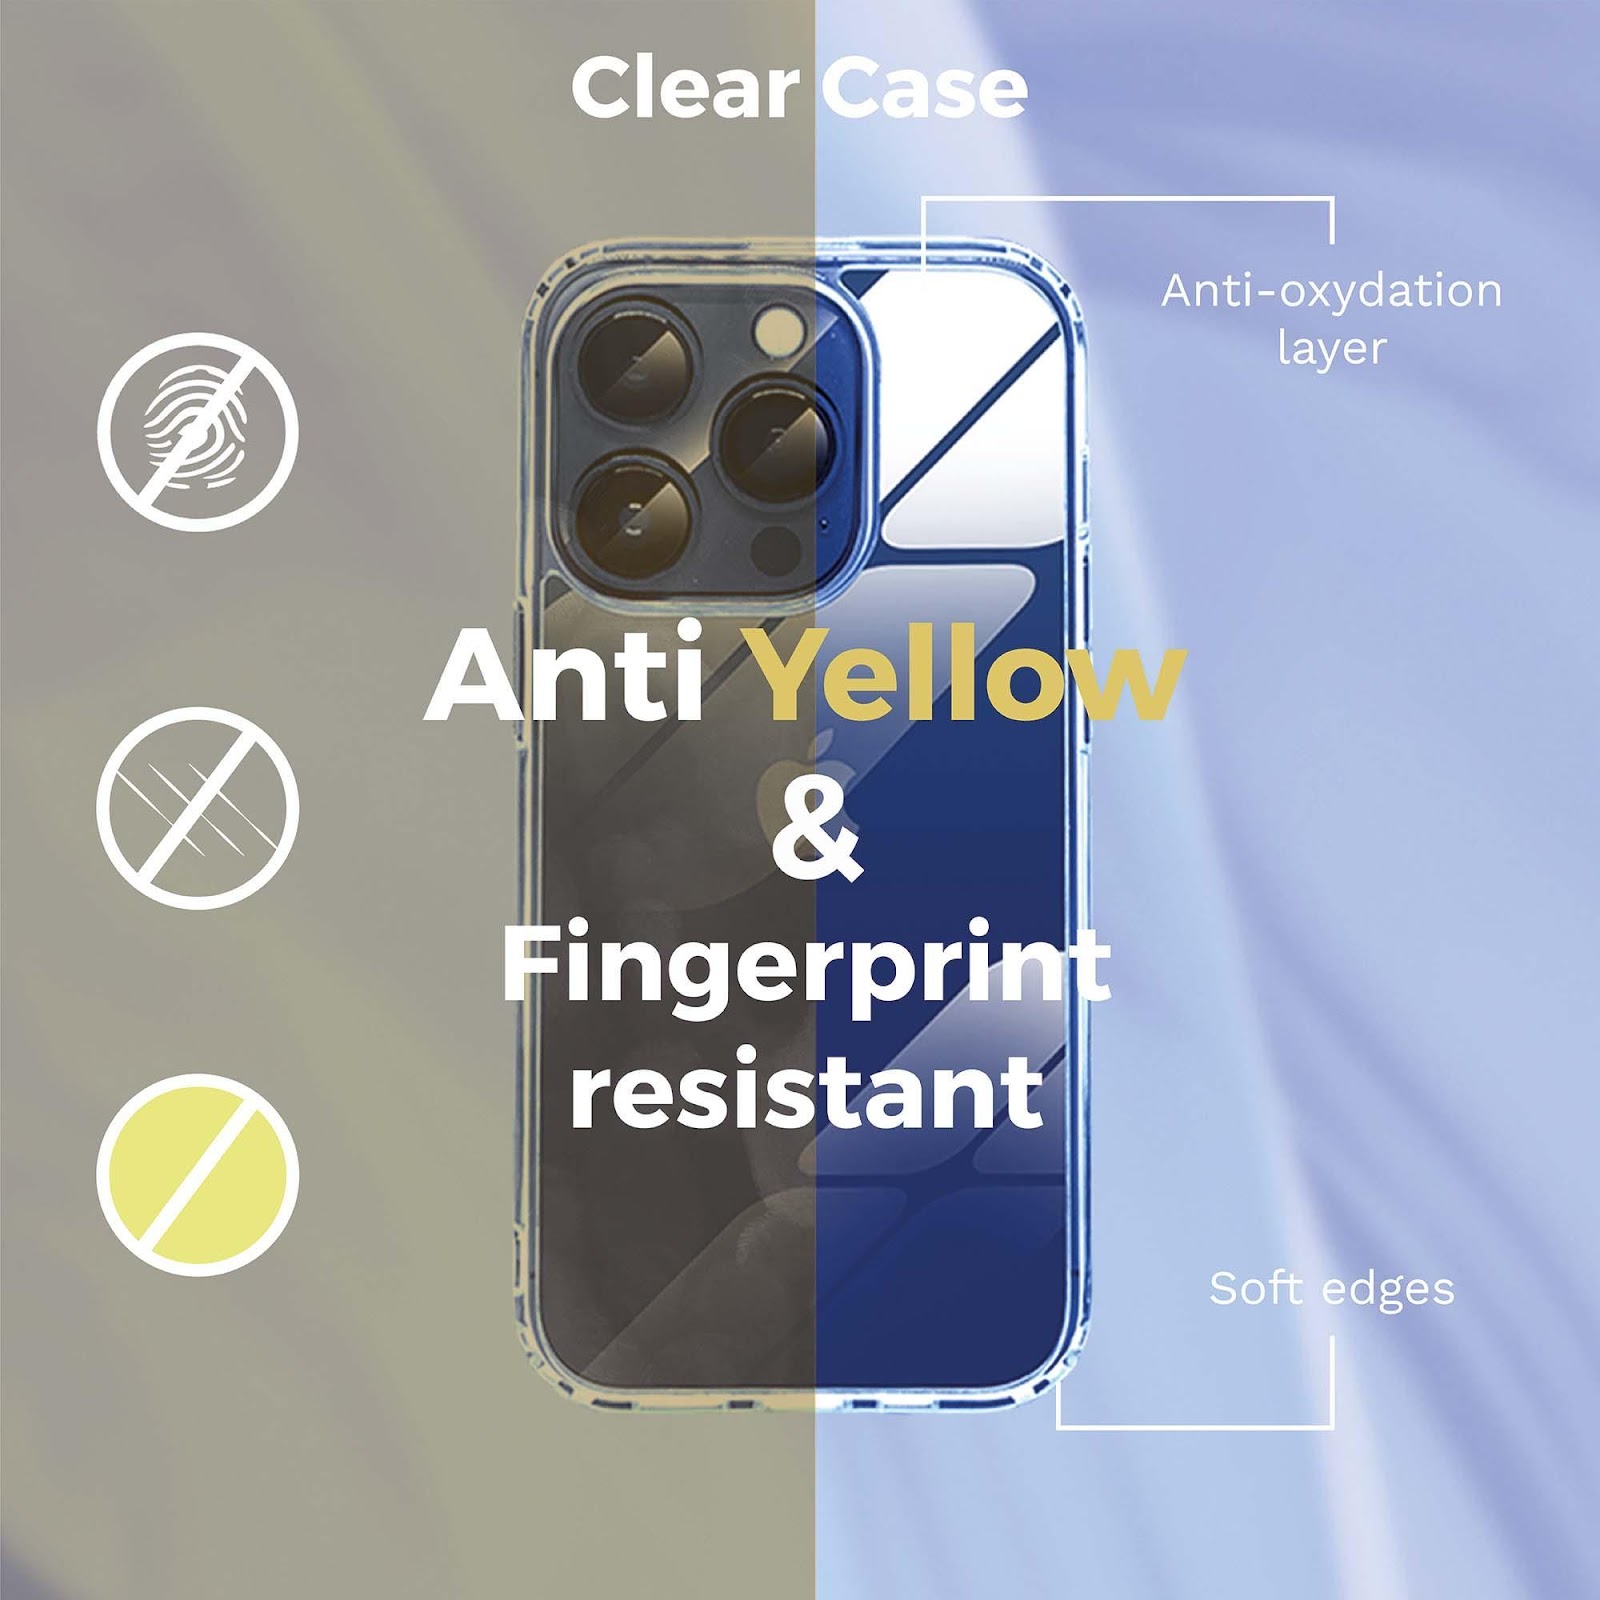 Anti yellow & Fingerprint resistant iPhone clear case